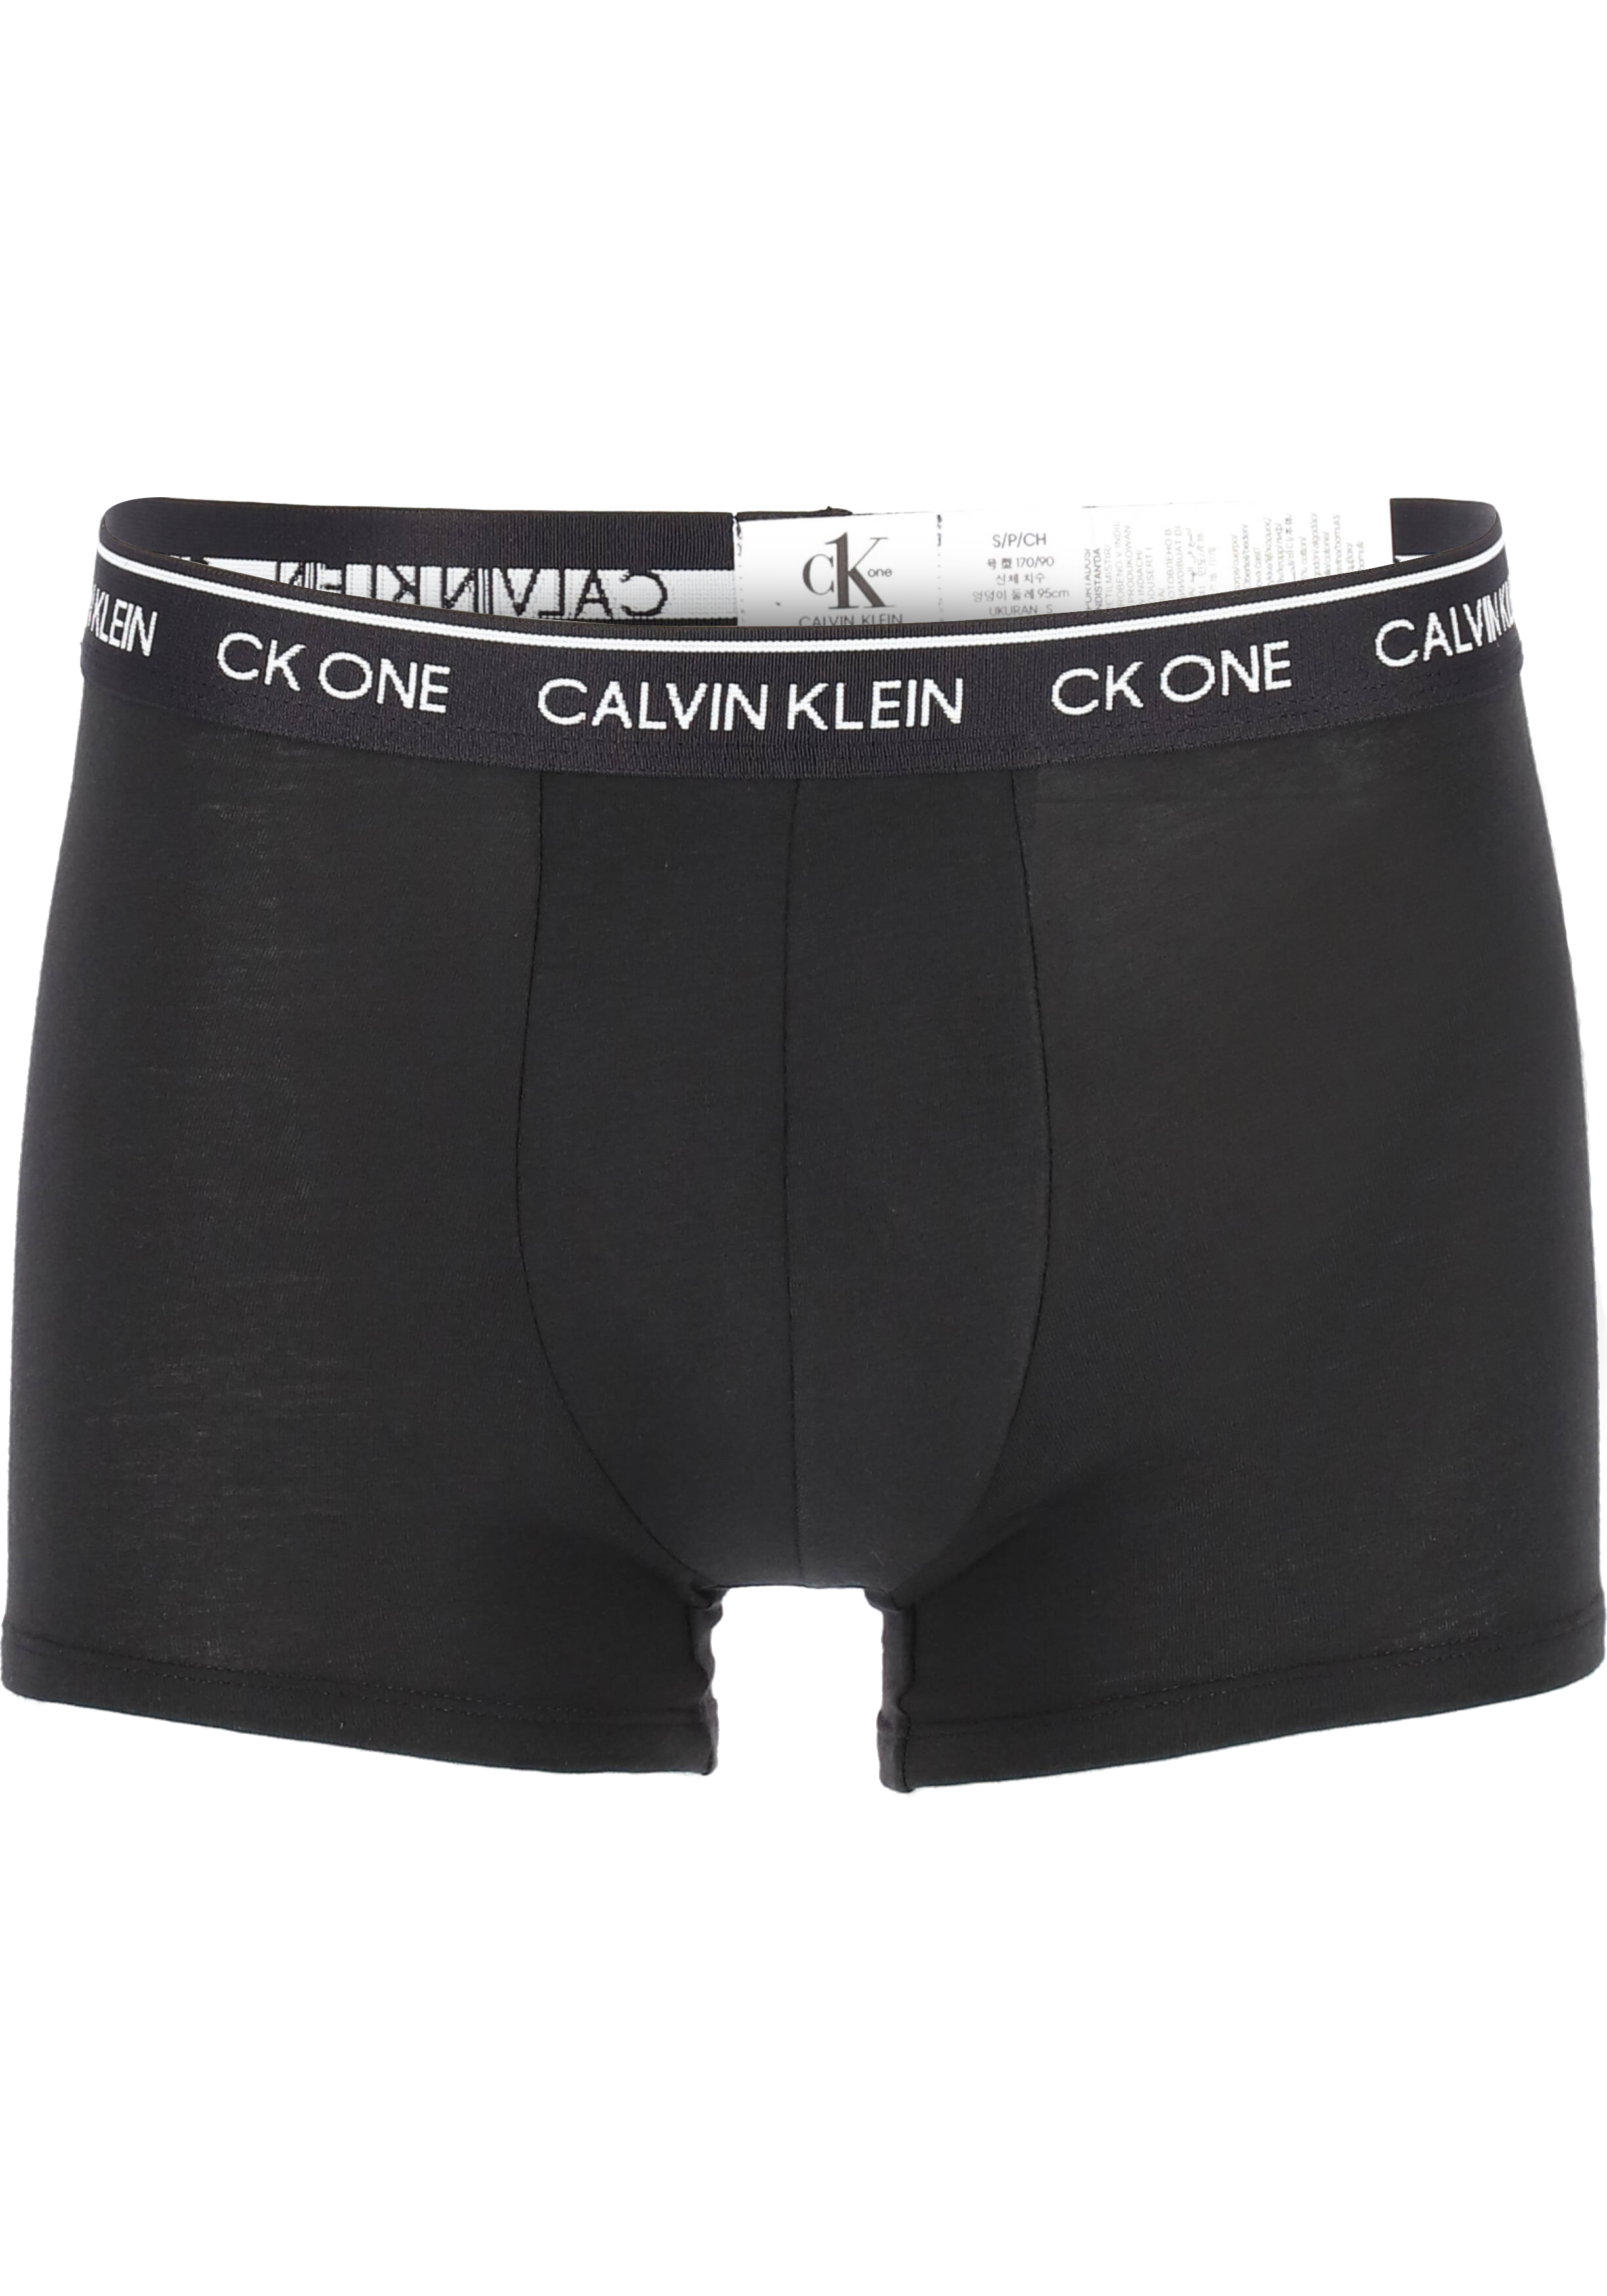 Calvin Klein CK ONE Cotton trunk (1-pack), heren boxer normale lengte, zwart